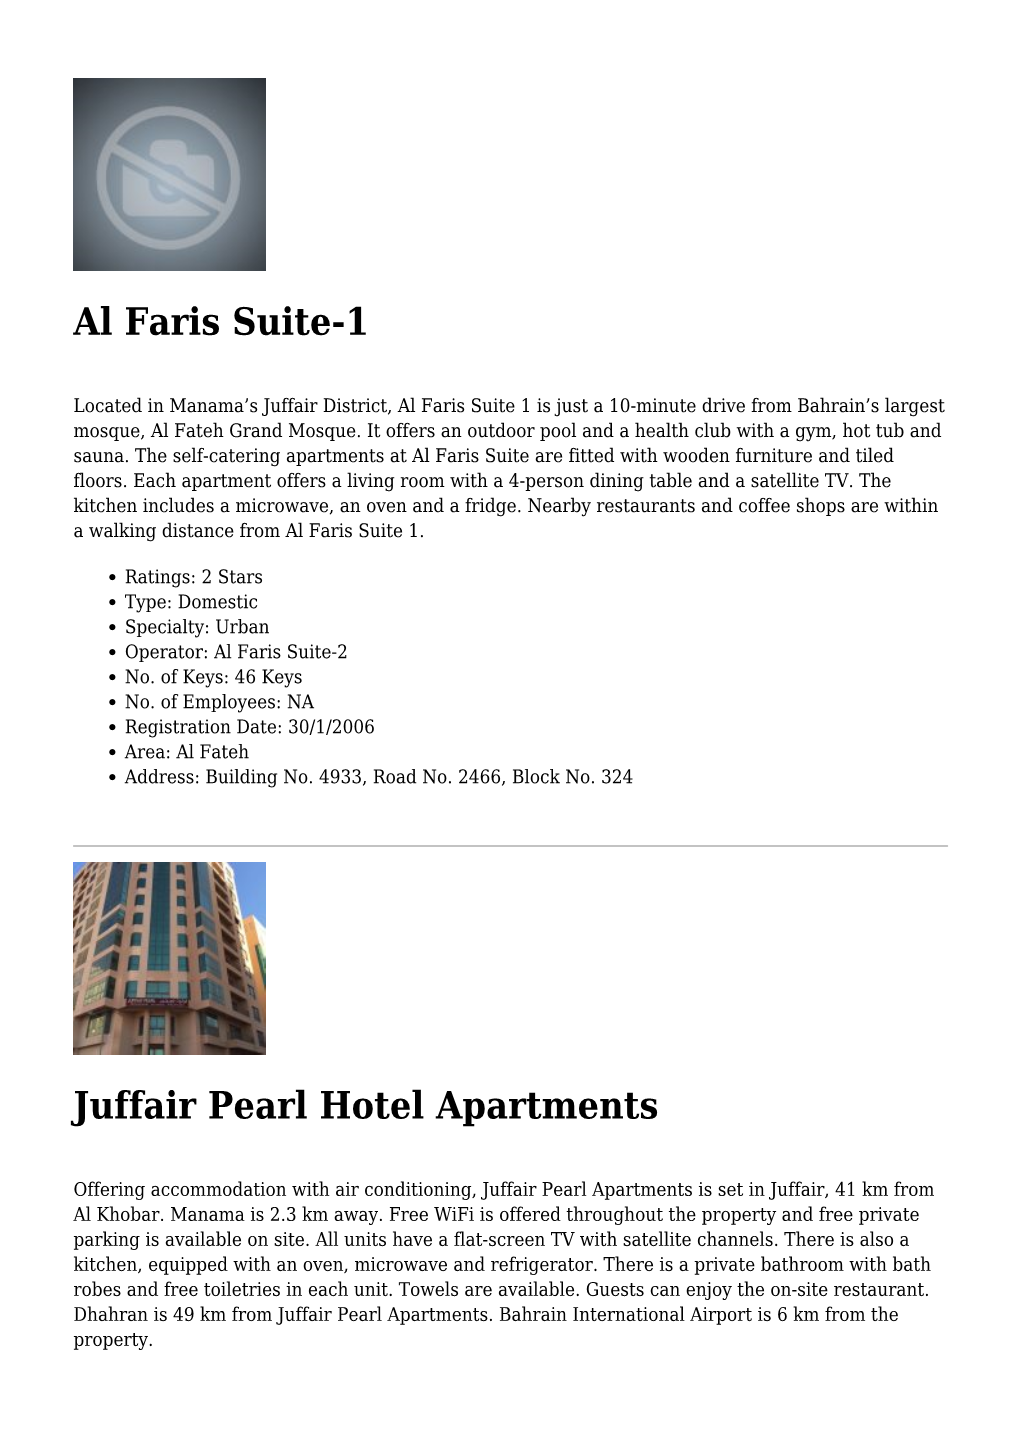 Al Faris Suite-1,Juffair Pearl Hotel Apartments,The Mirage Hotel,Safari